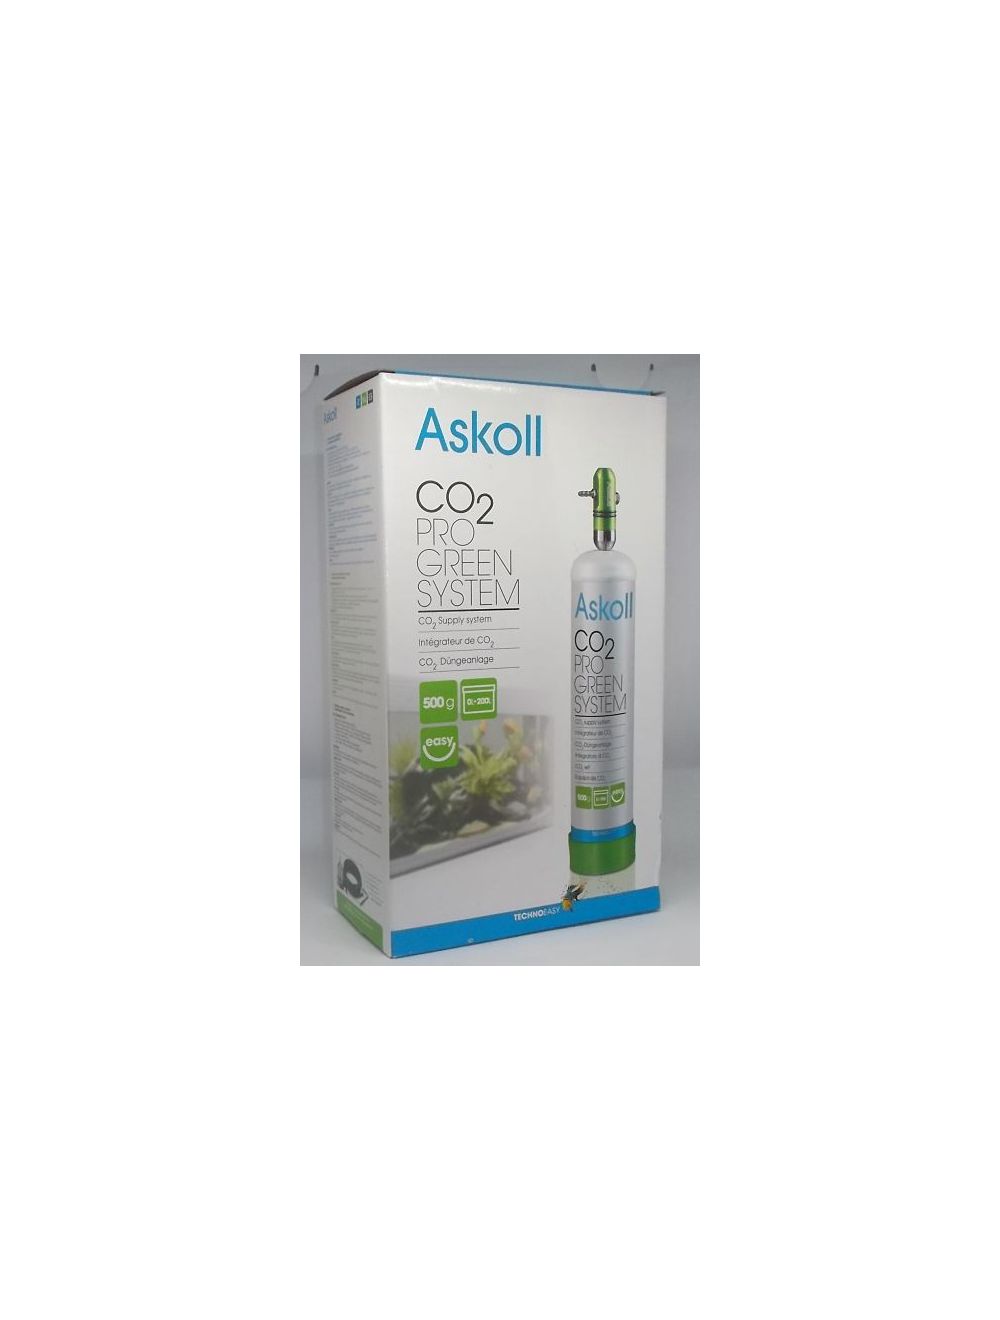 Askoll co2 pro green system